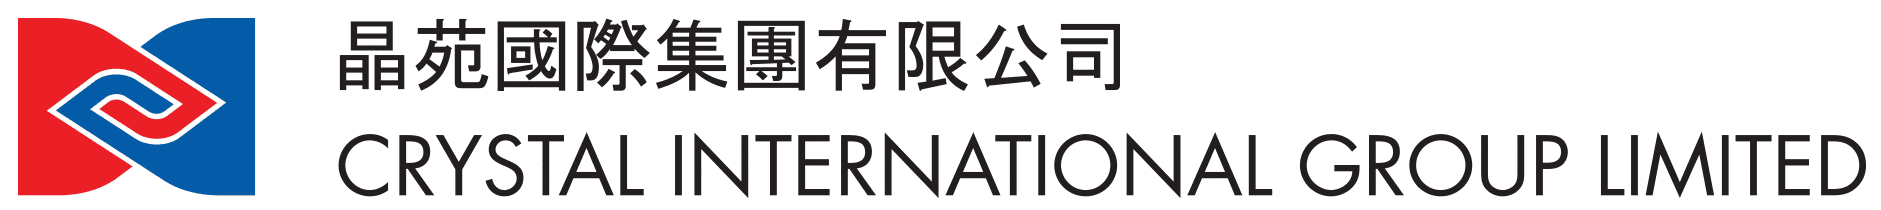 Crystal International Group Brand Logo